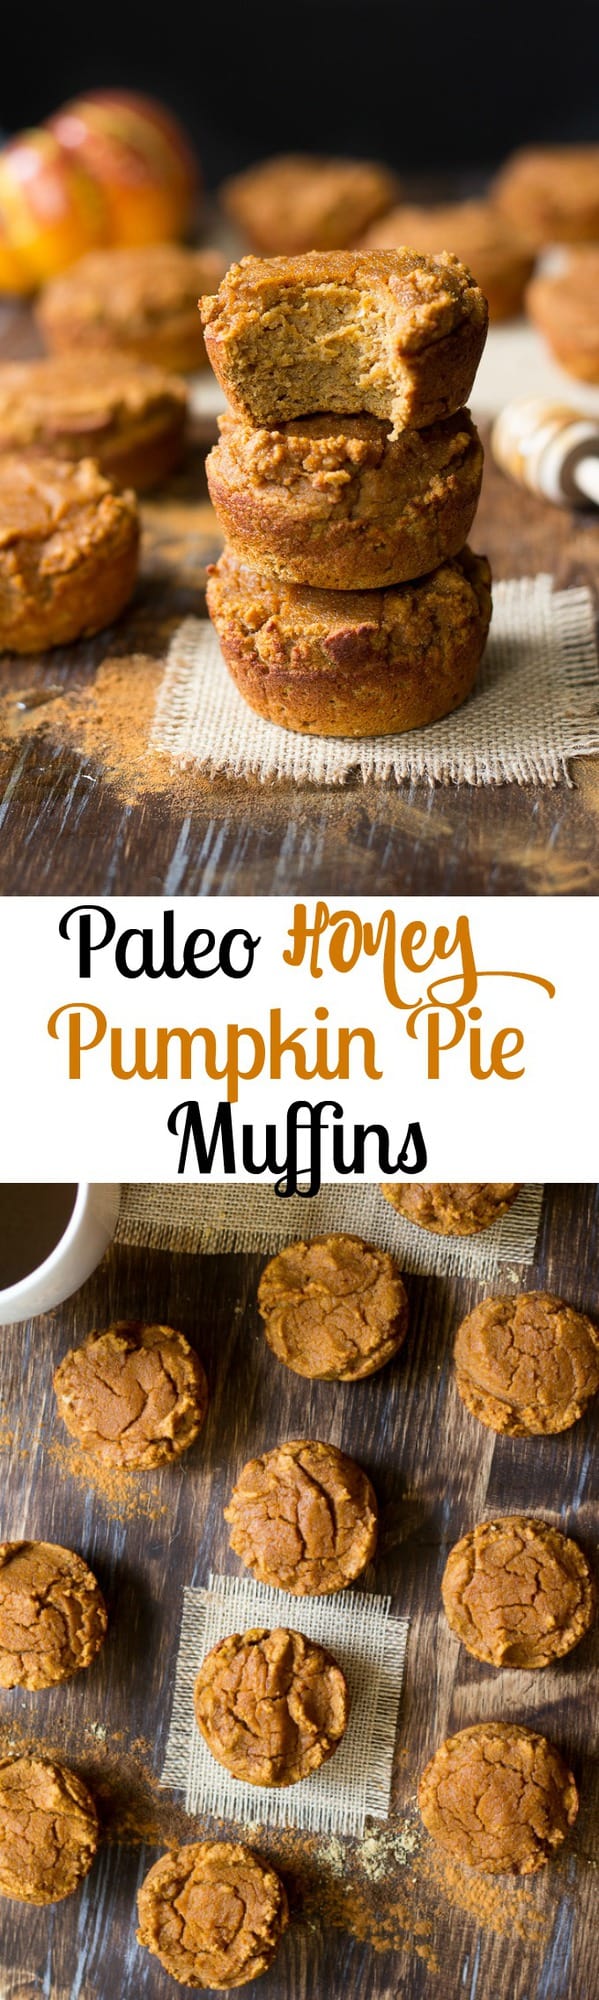 Paleo honey pumpkin pie muffins - easy to make, healthy, grain free pumpkin pie muffins sweetened with raw honey